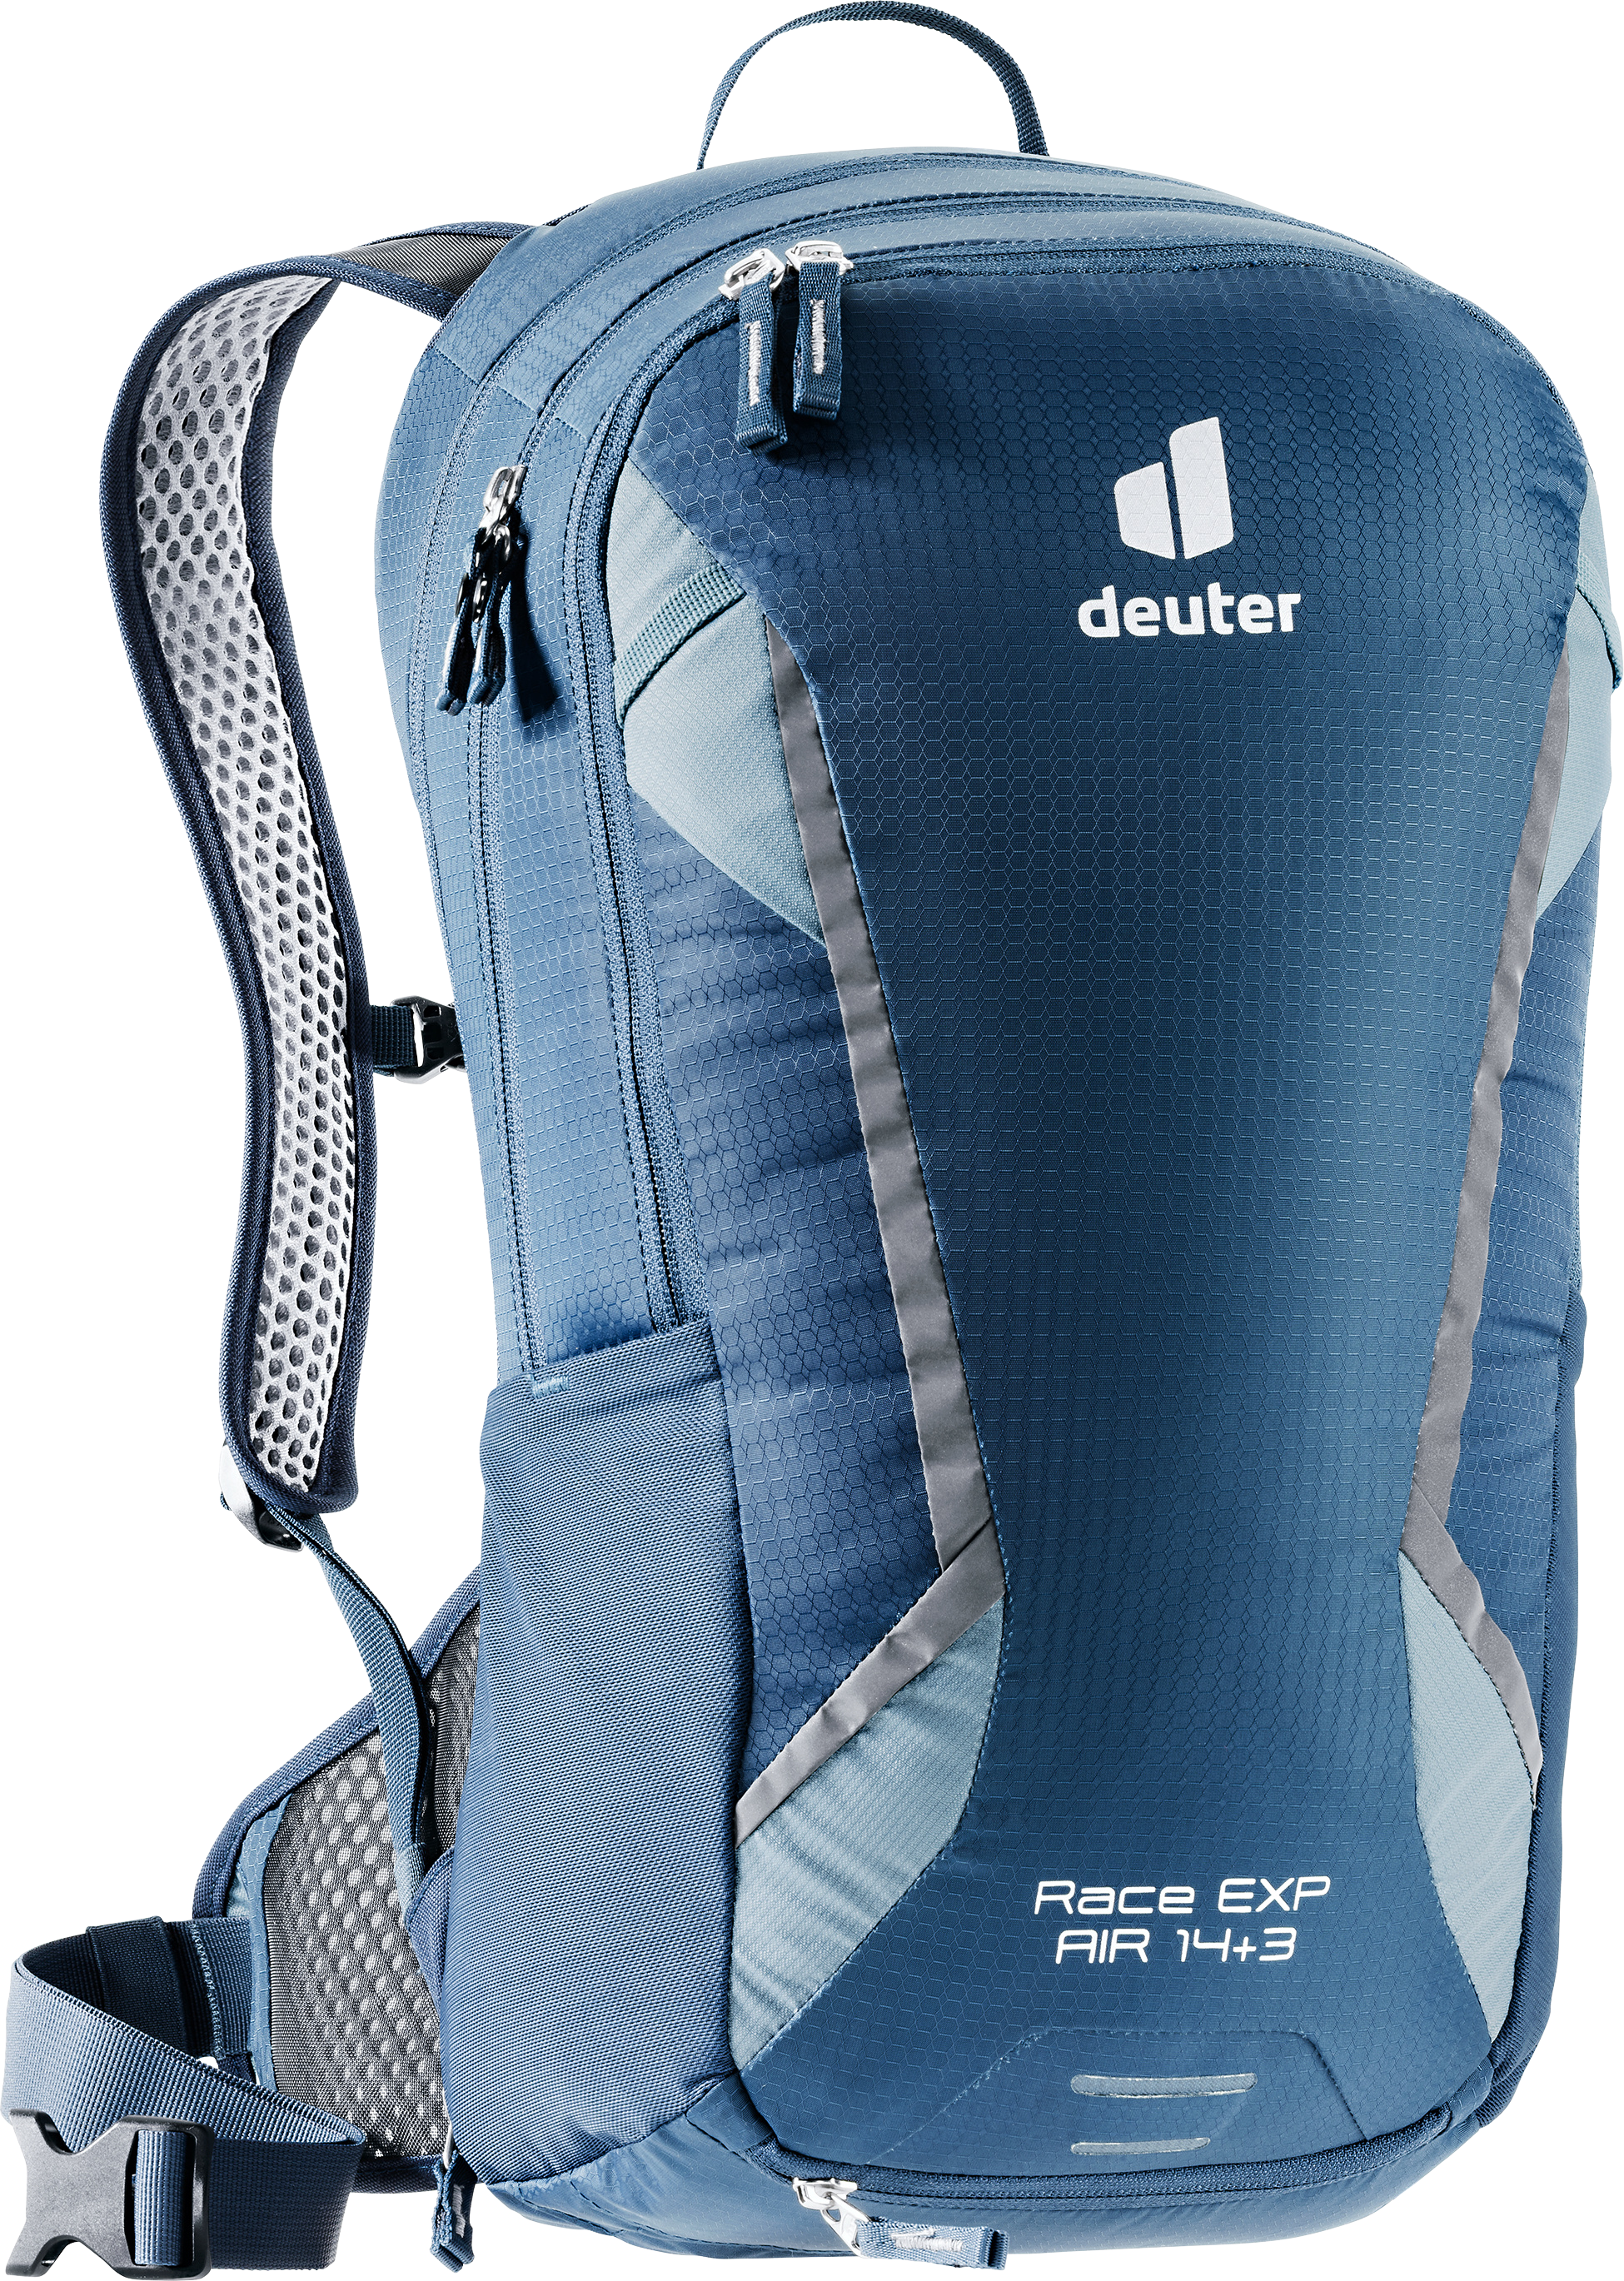 Forster Deuter Race EXP Air Fahrradrucksack kaufen | Deuter